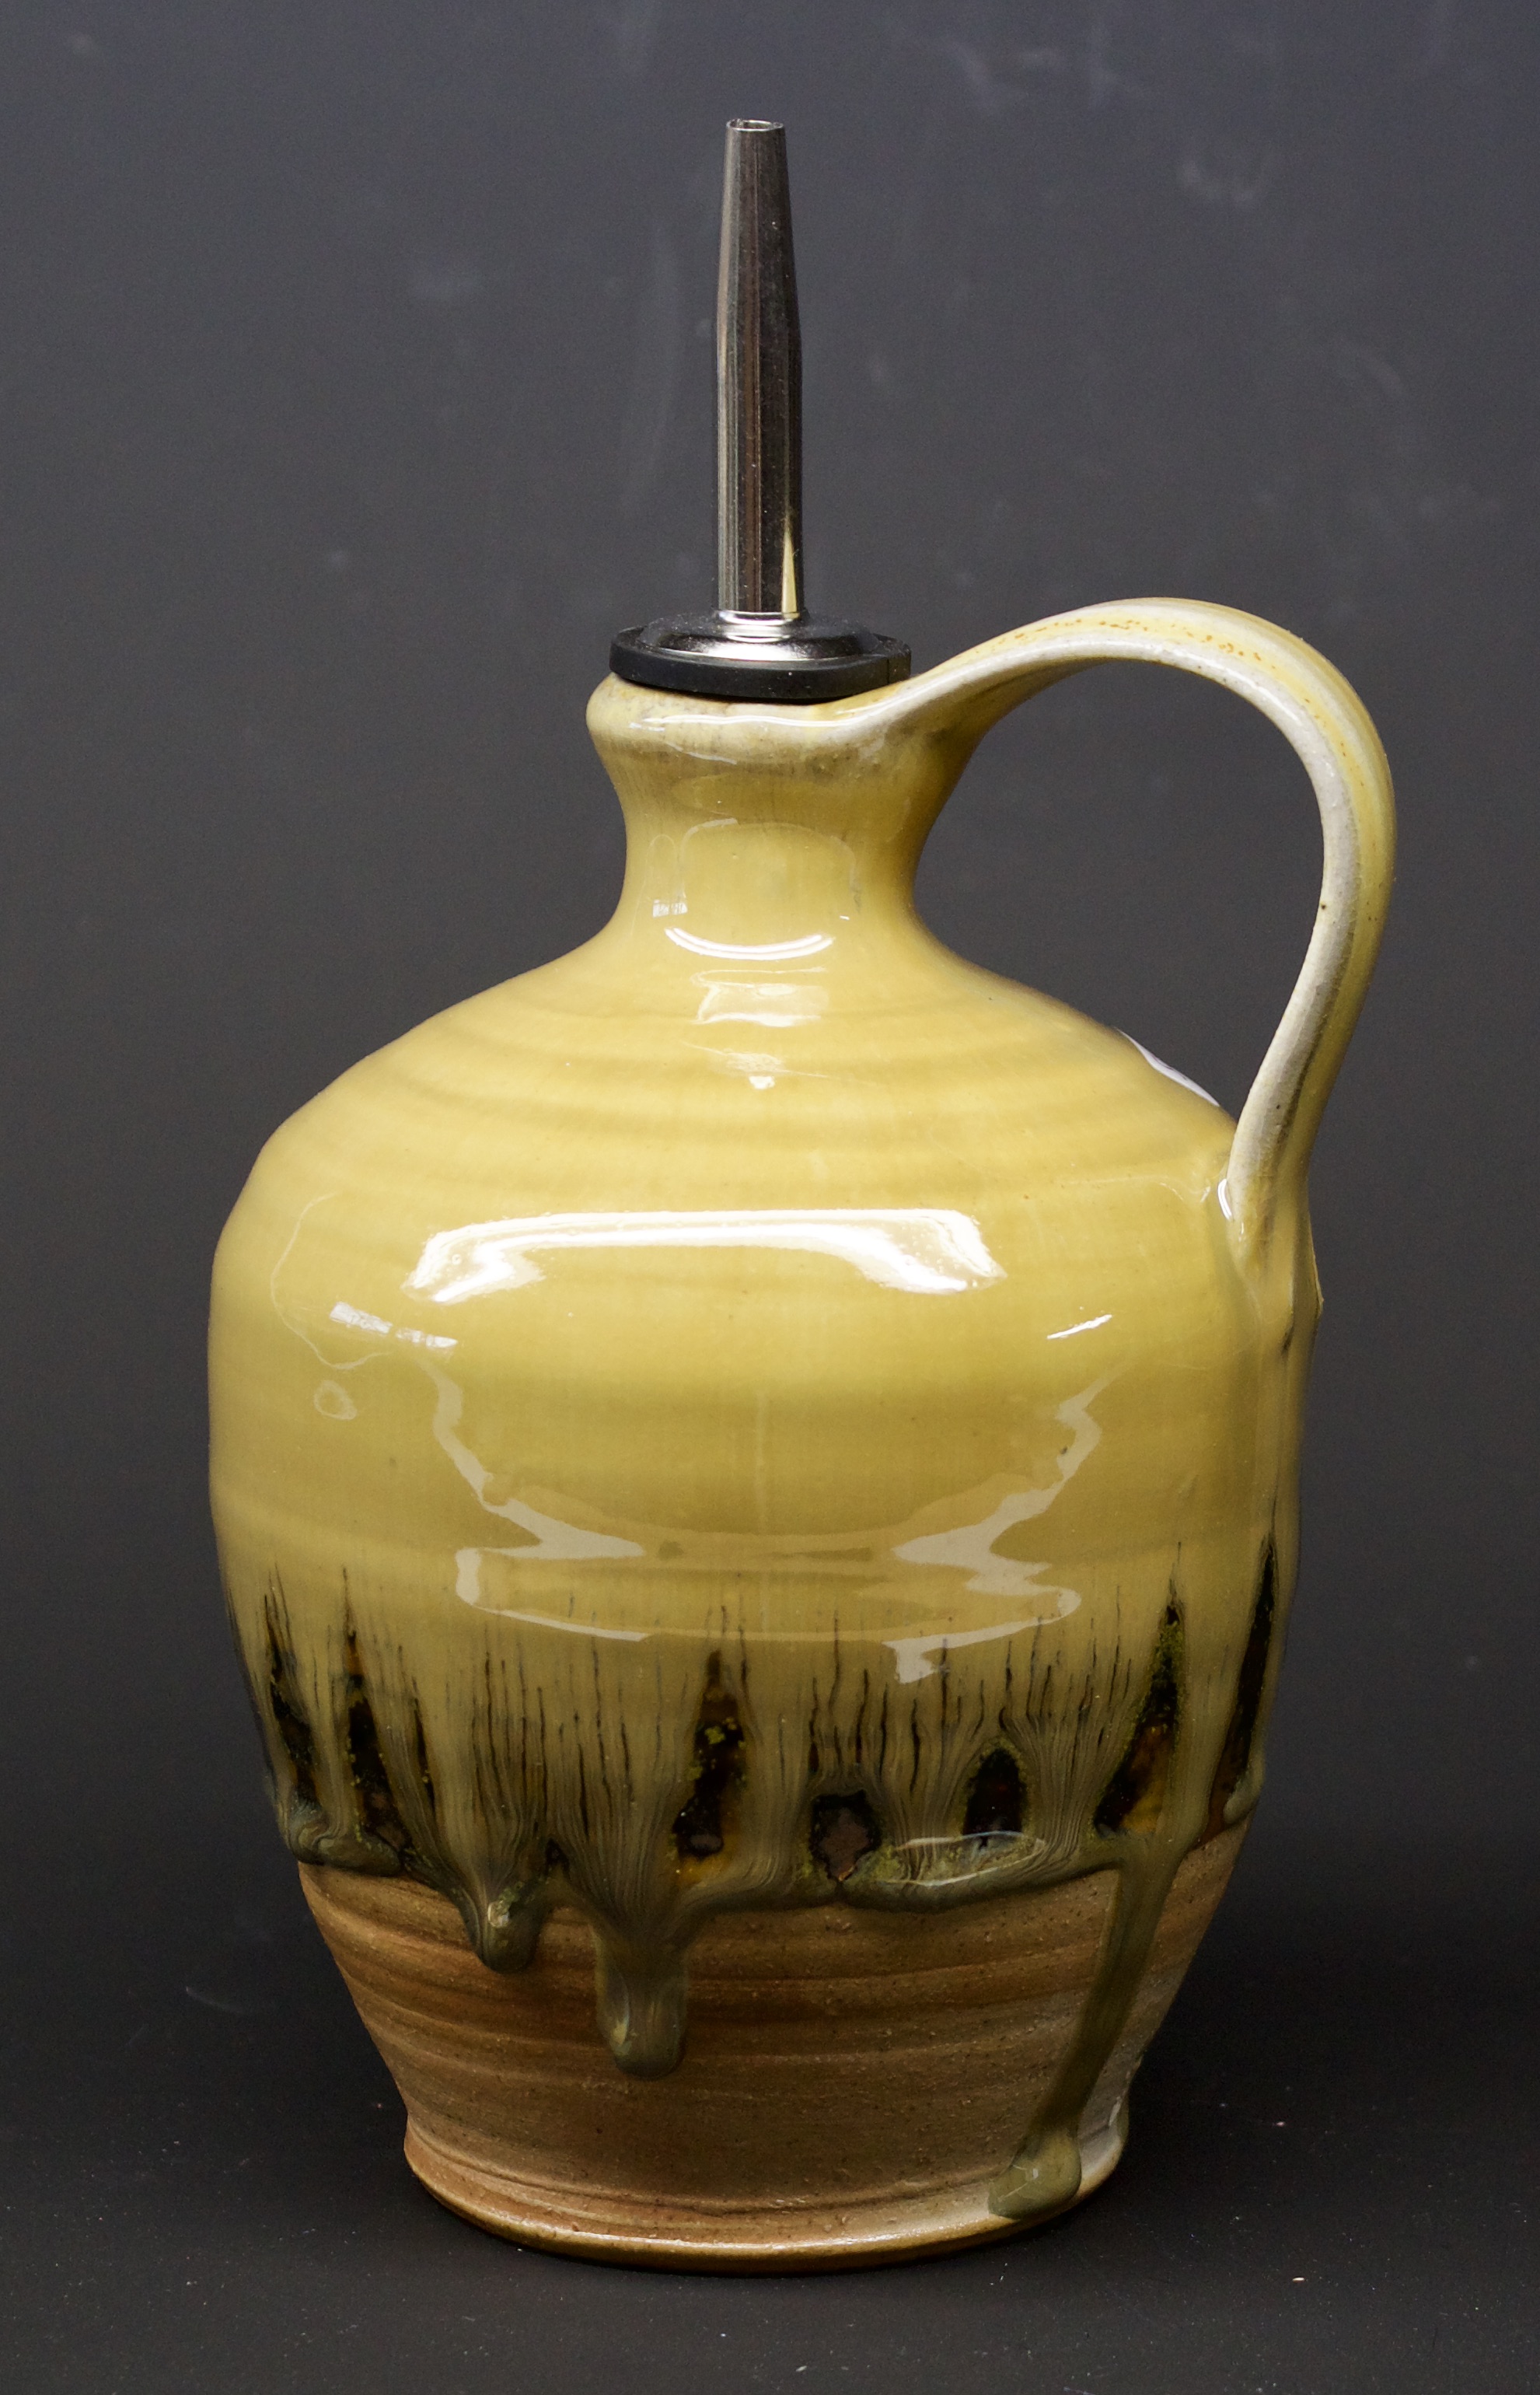 18. Olive oil bottle, Tenmoku & thistle glaze,  6" x 4"
$75